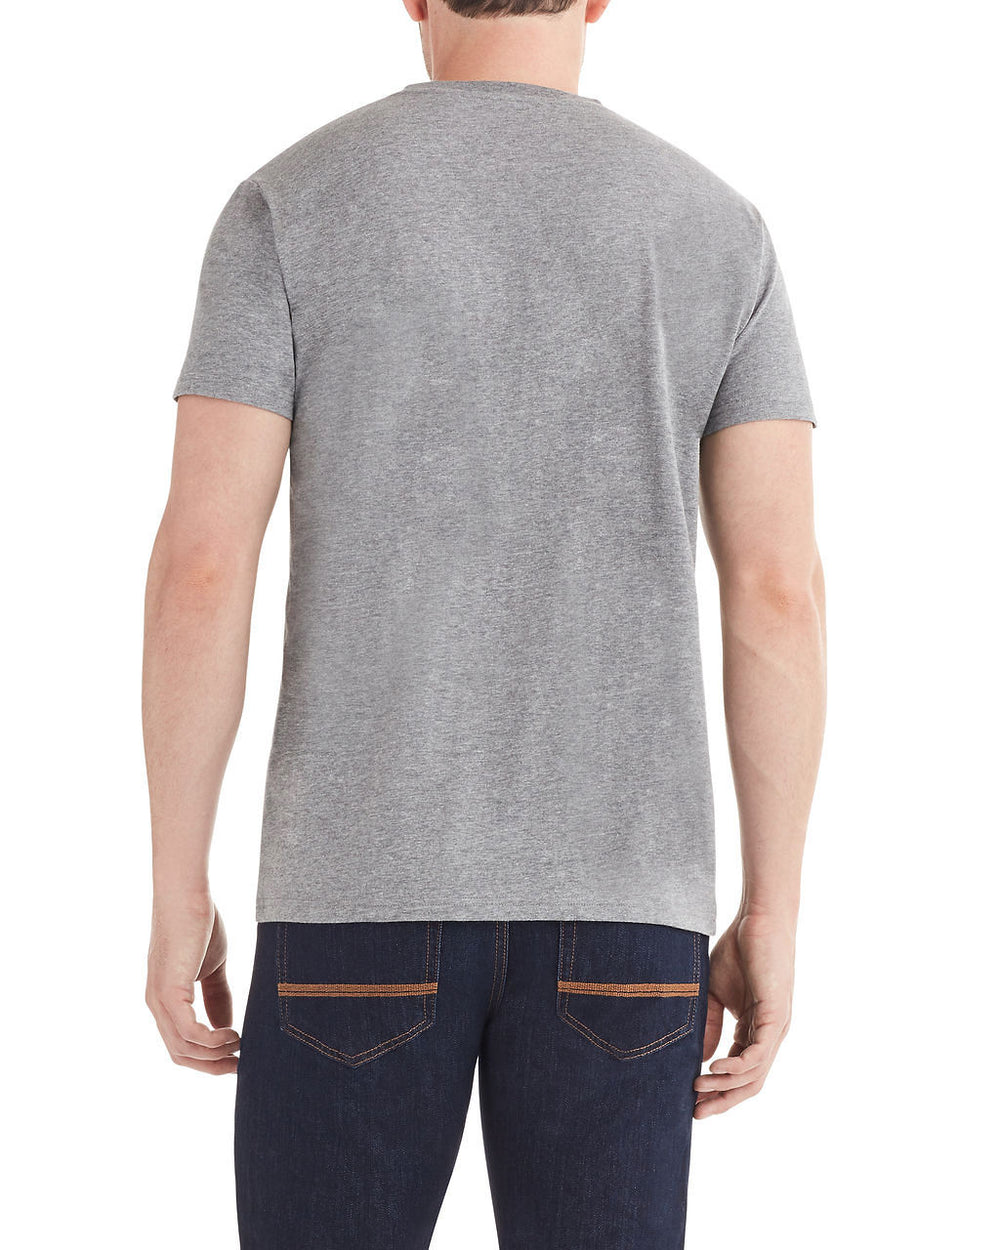 Dot Stripe Pocket Print Styled T-Shirt - Grey